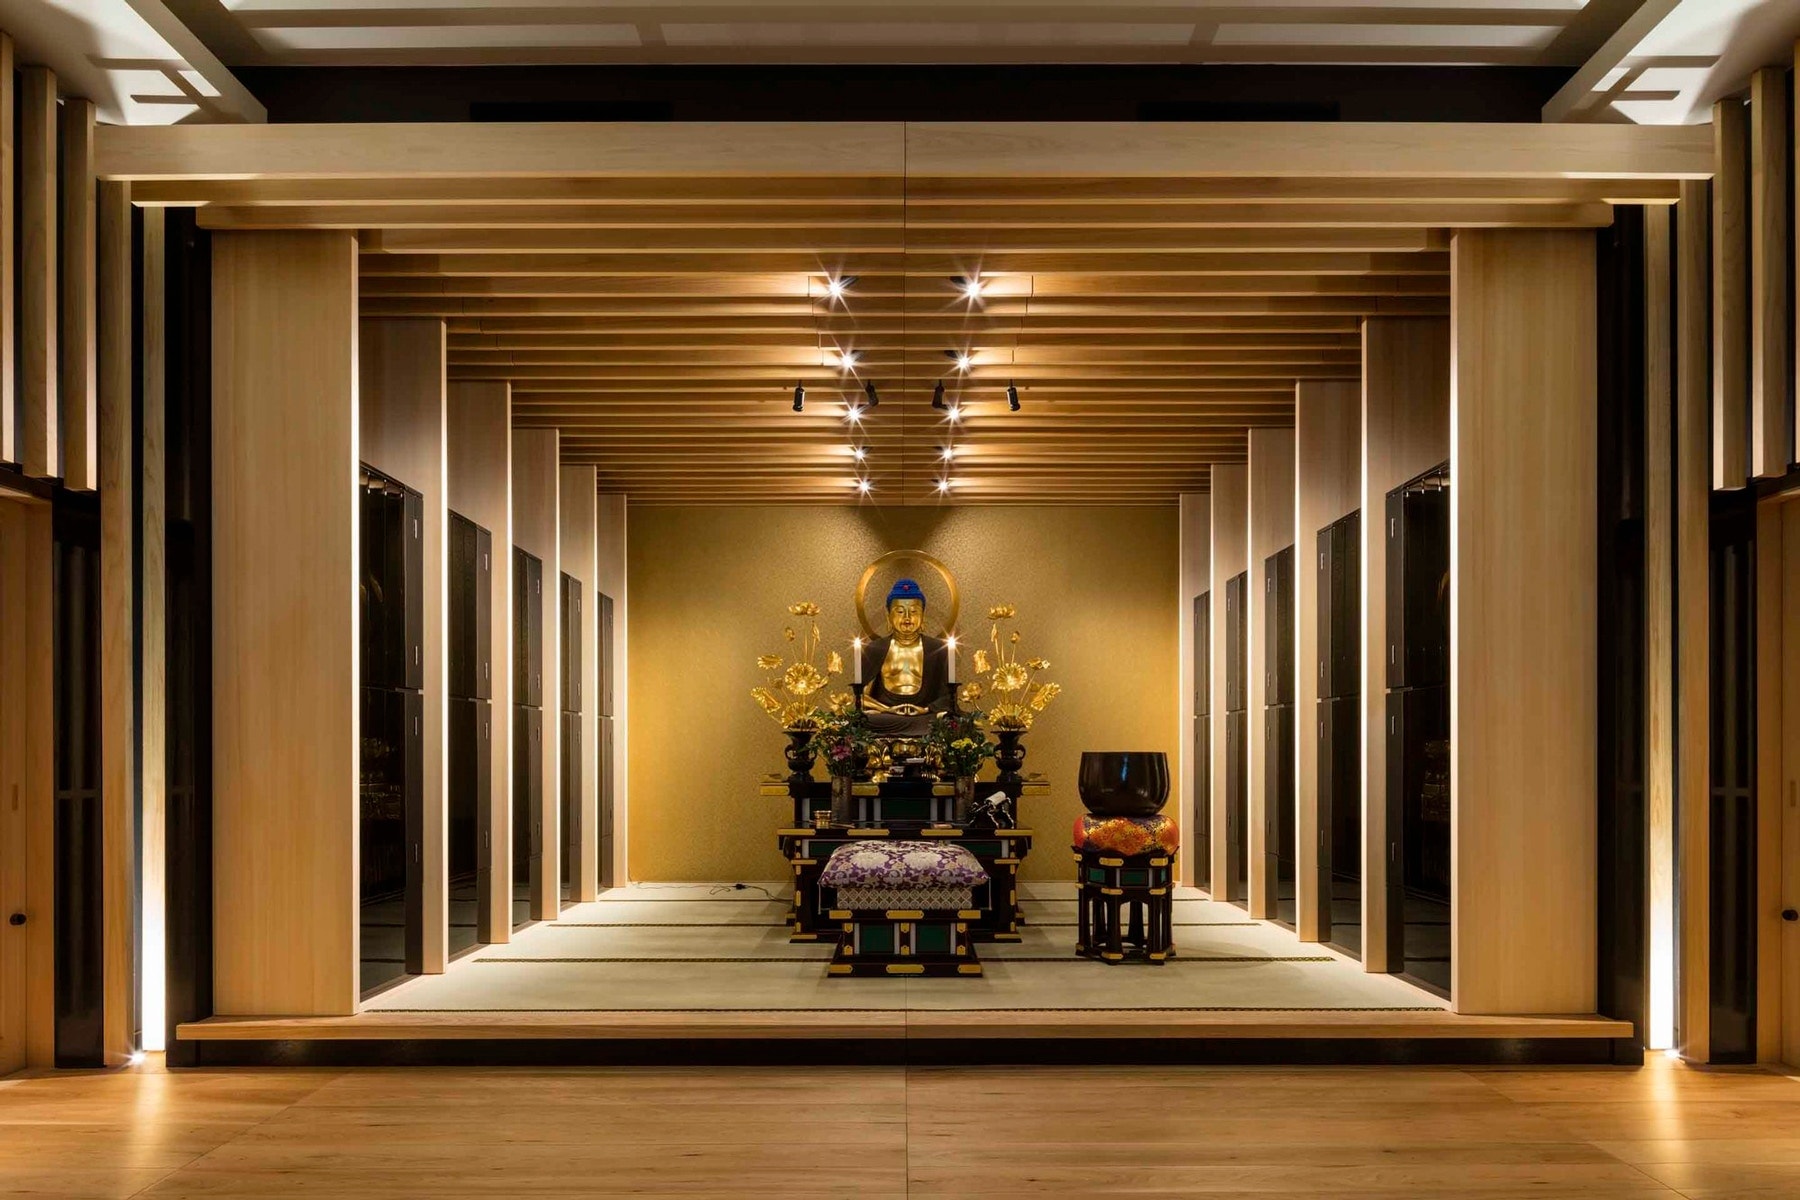 Takashi Okuno 為 1316 歲寺廟設計現代化位牌堂